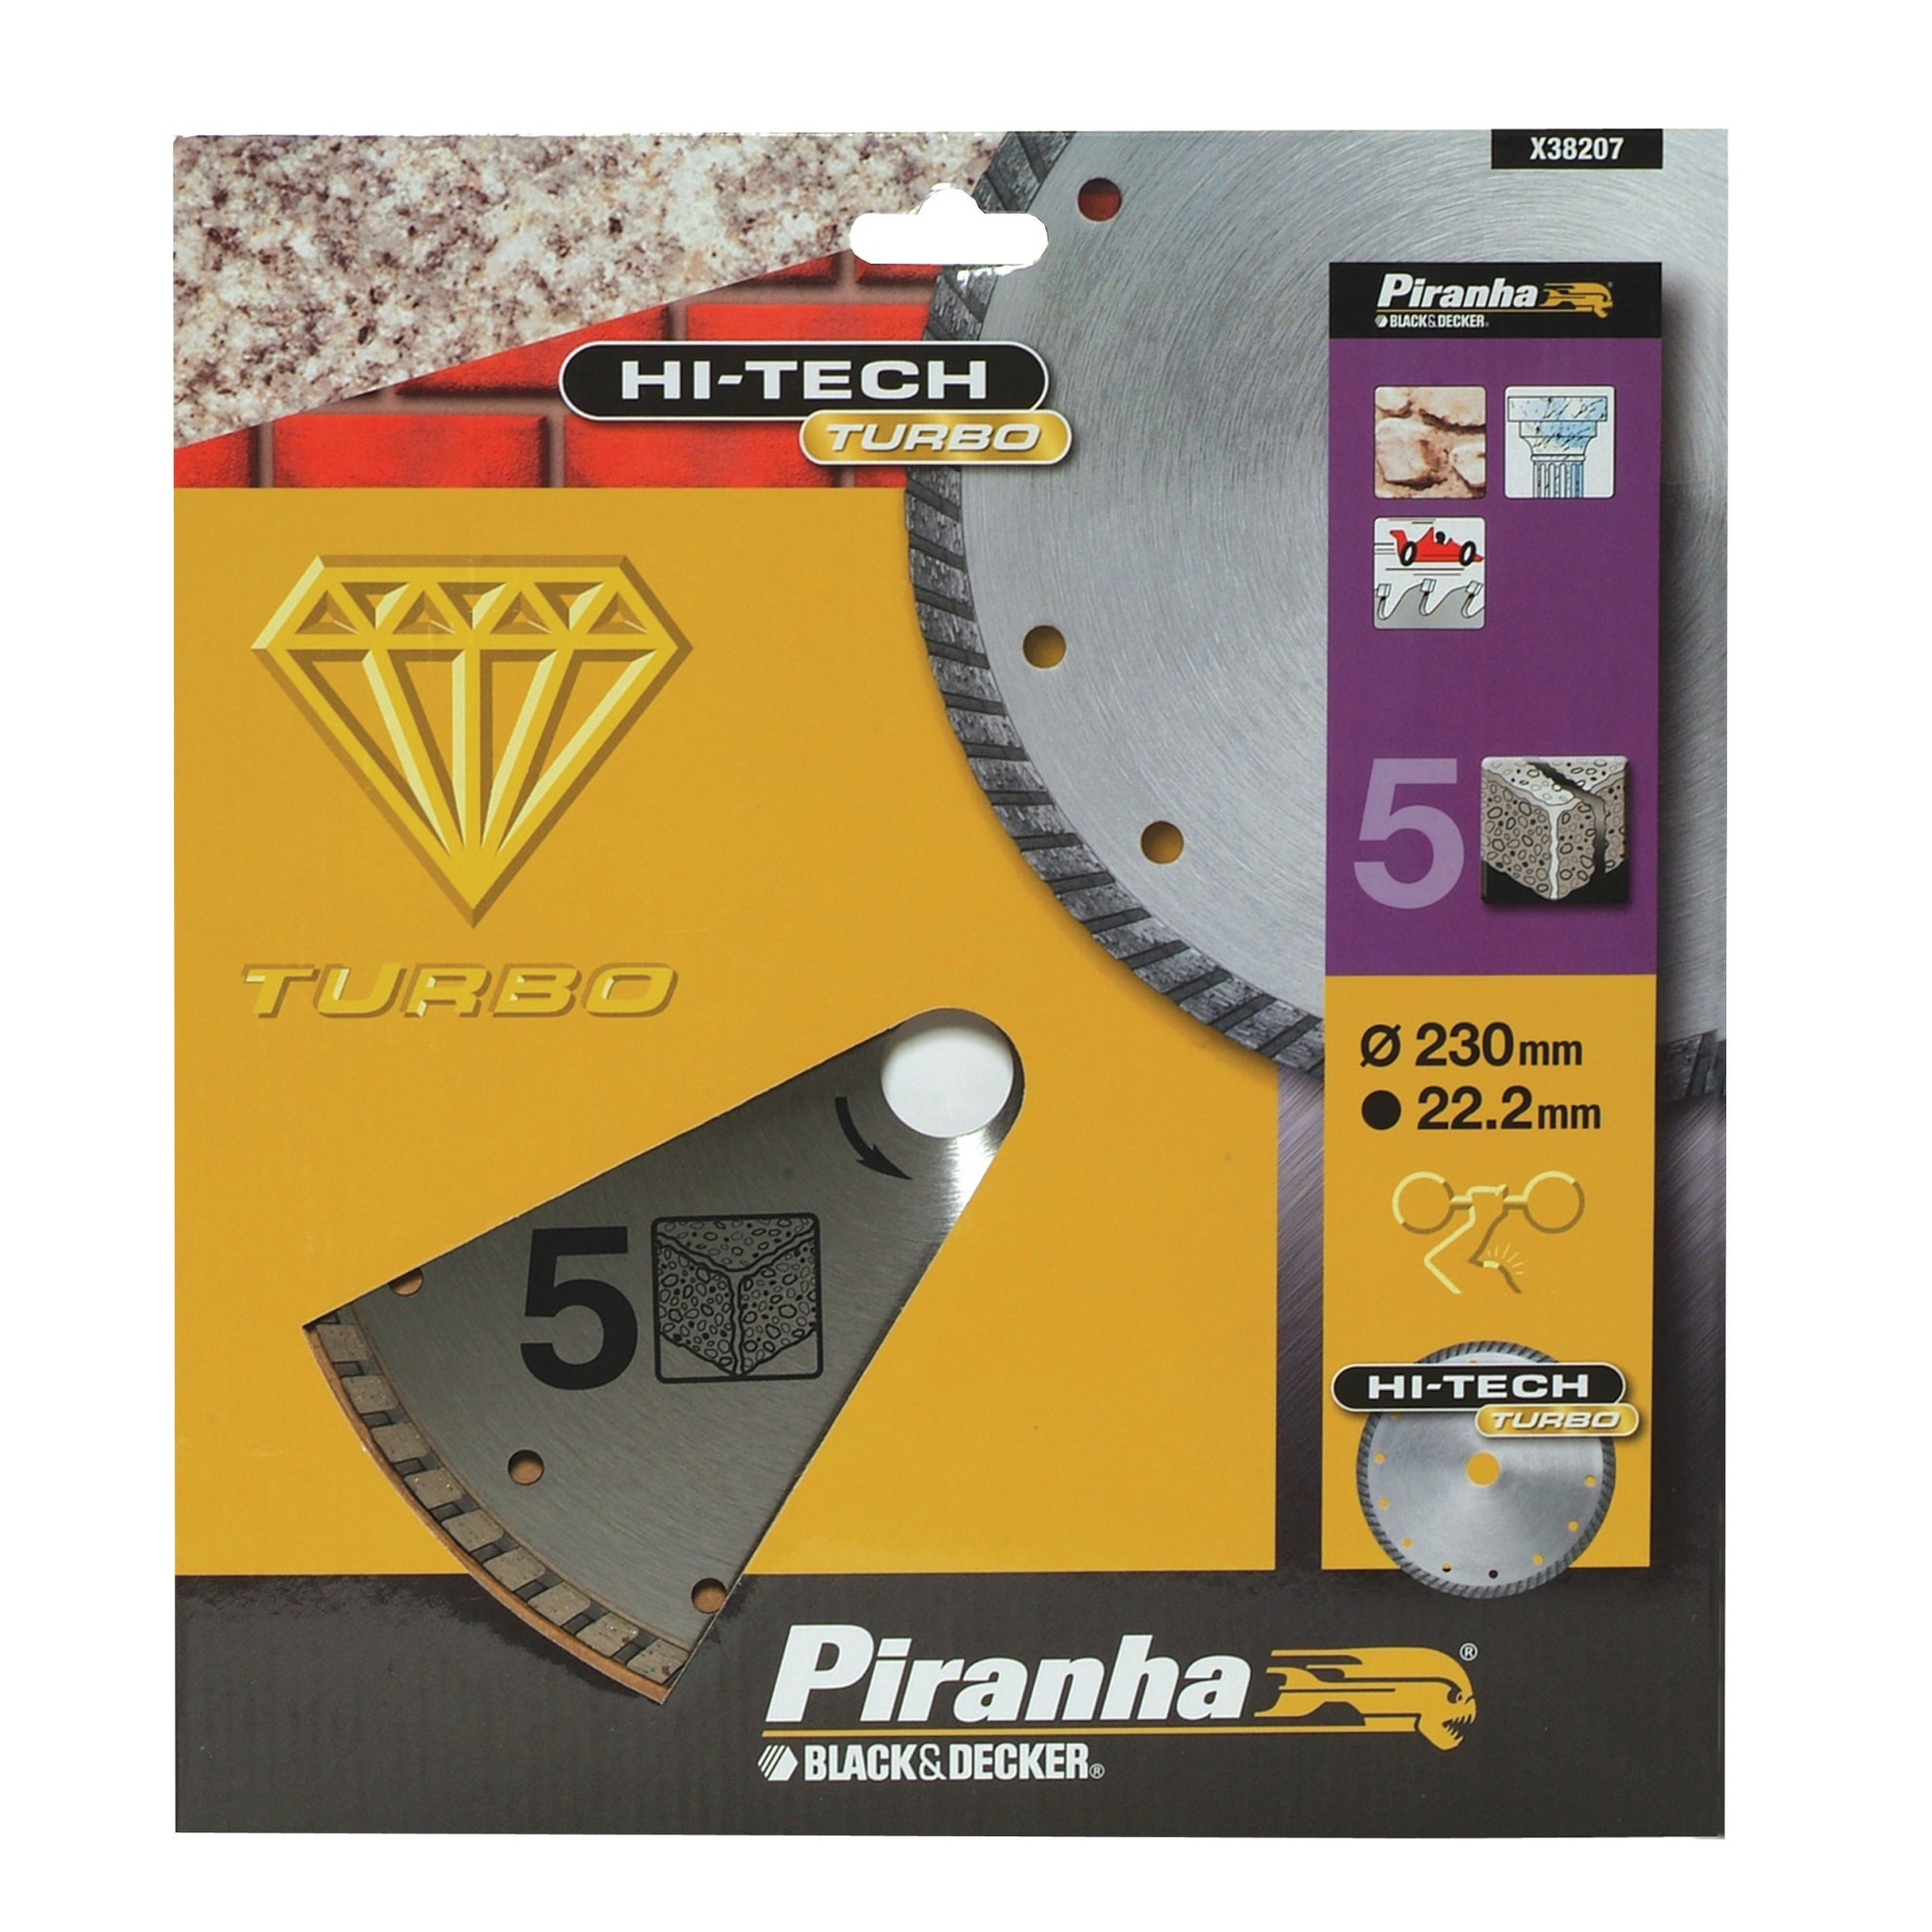 Piranha HI-TECH diamantblad volle rand 230 mm X38207